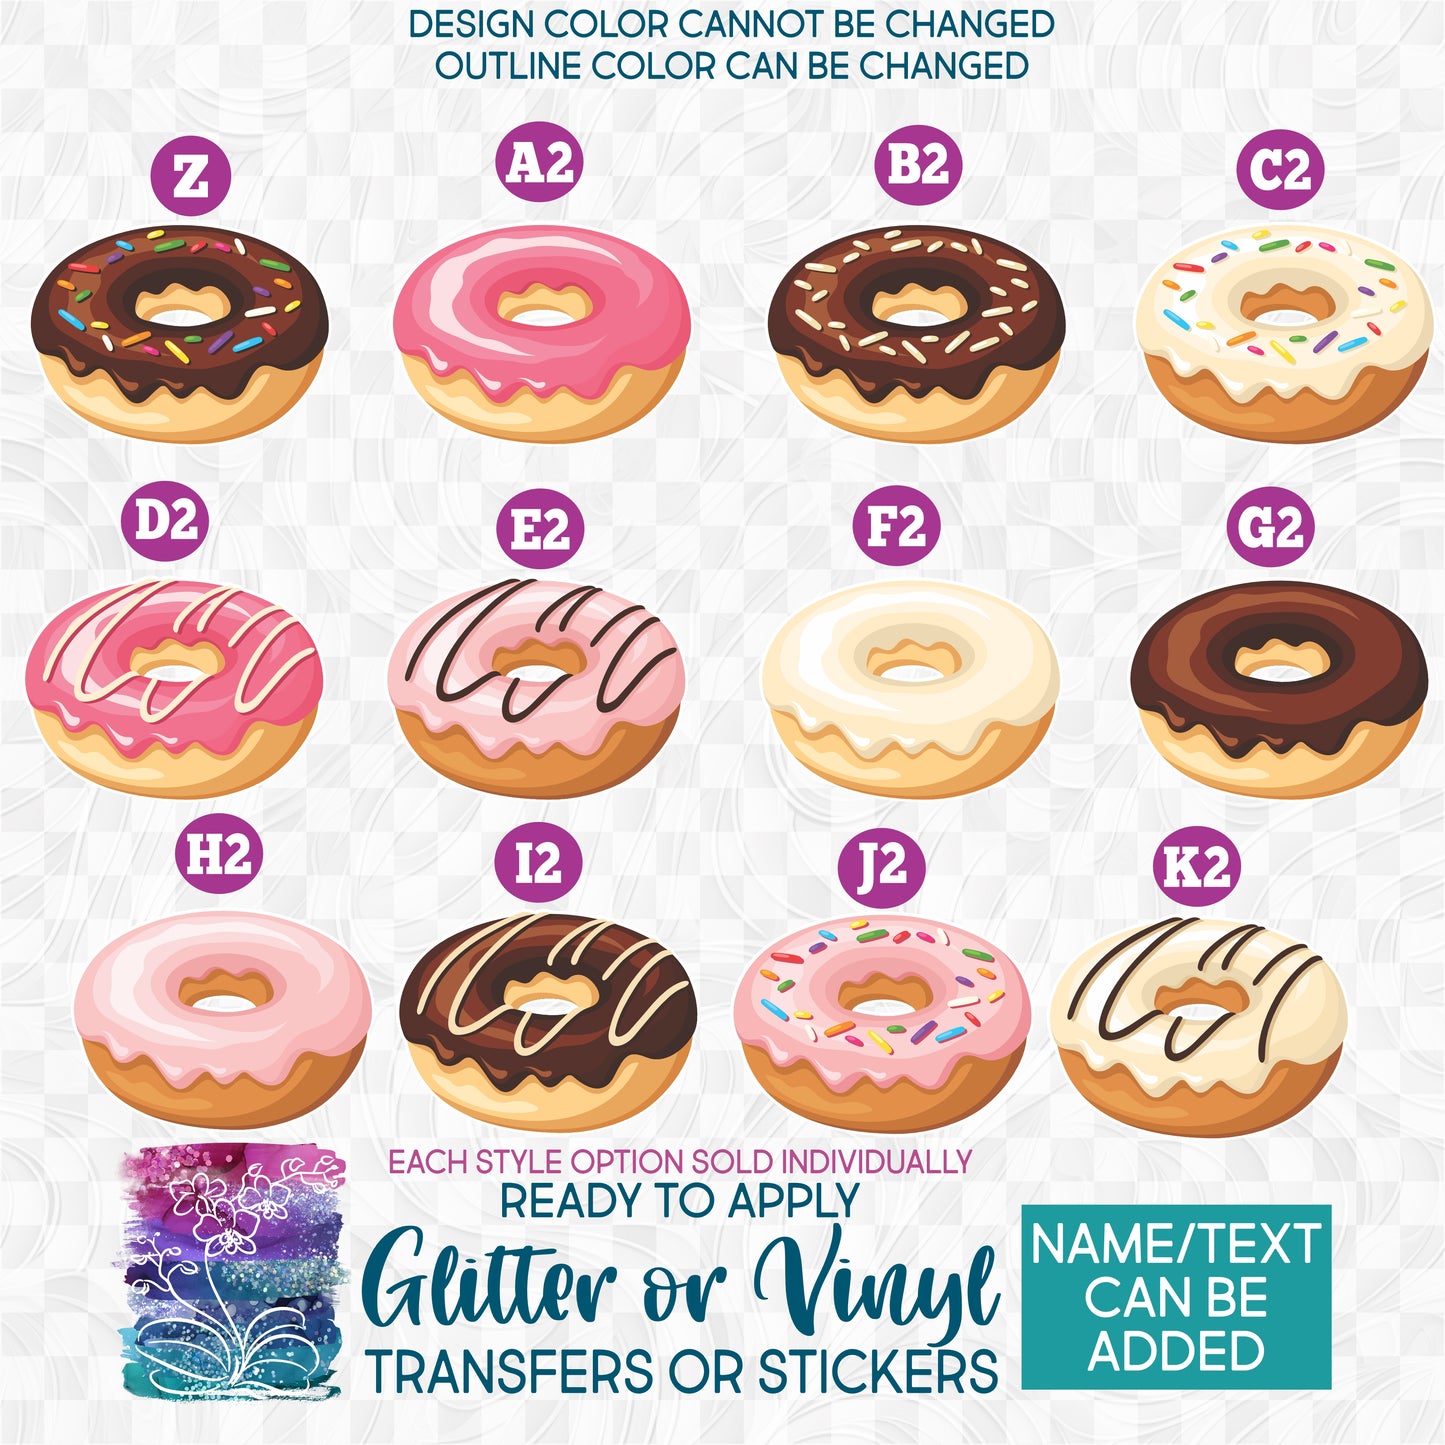 (s242-1) Watercolor Donut 2 Glitter or Vinyl Iron-On Transfer or Sticker